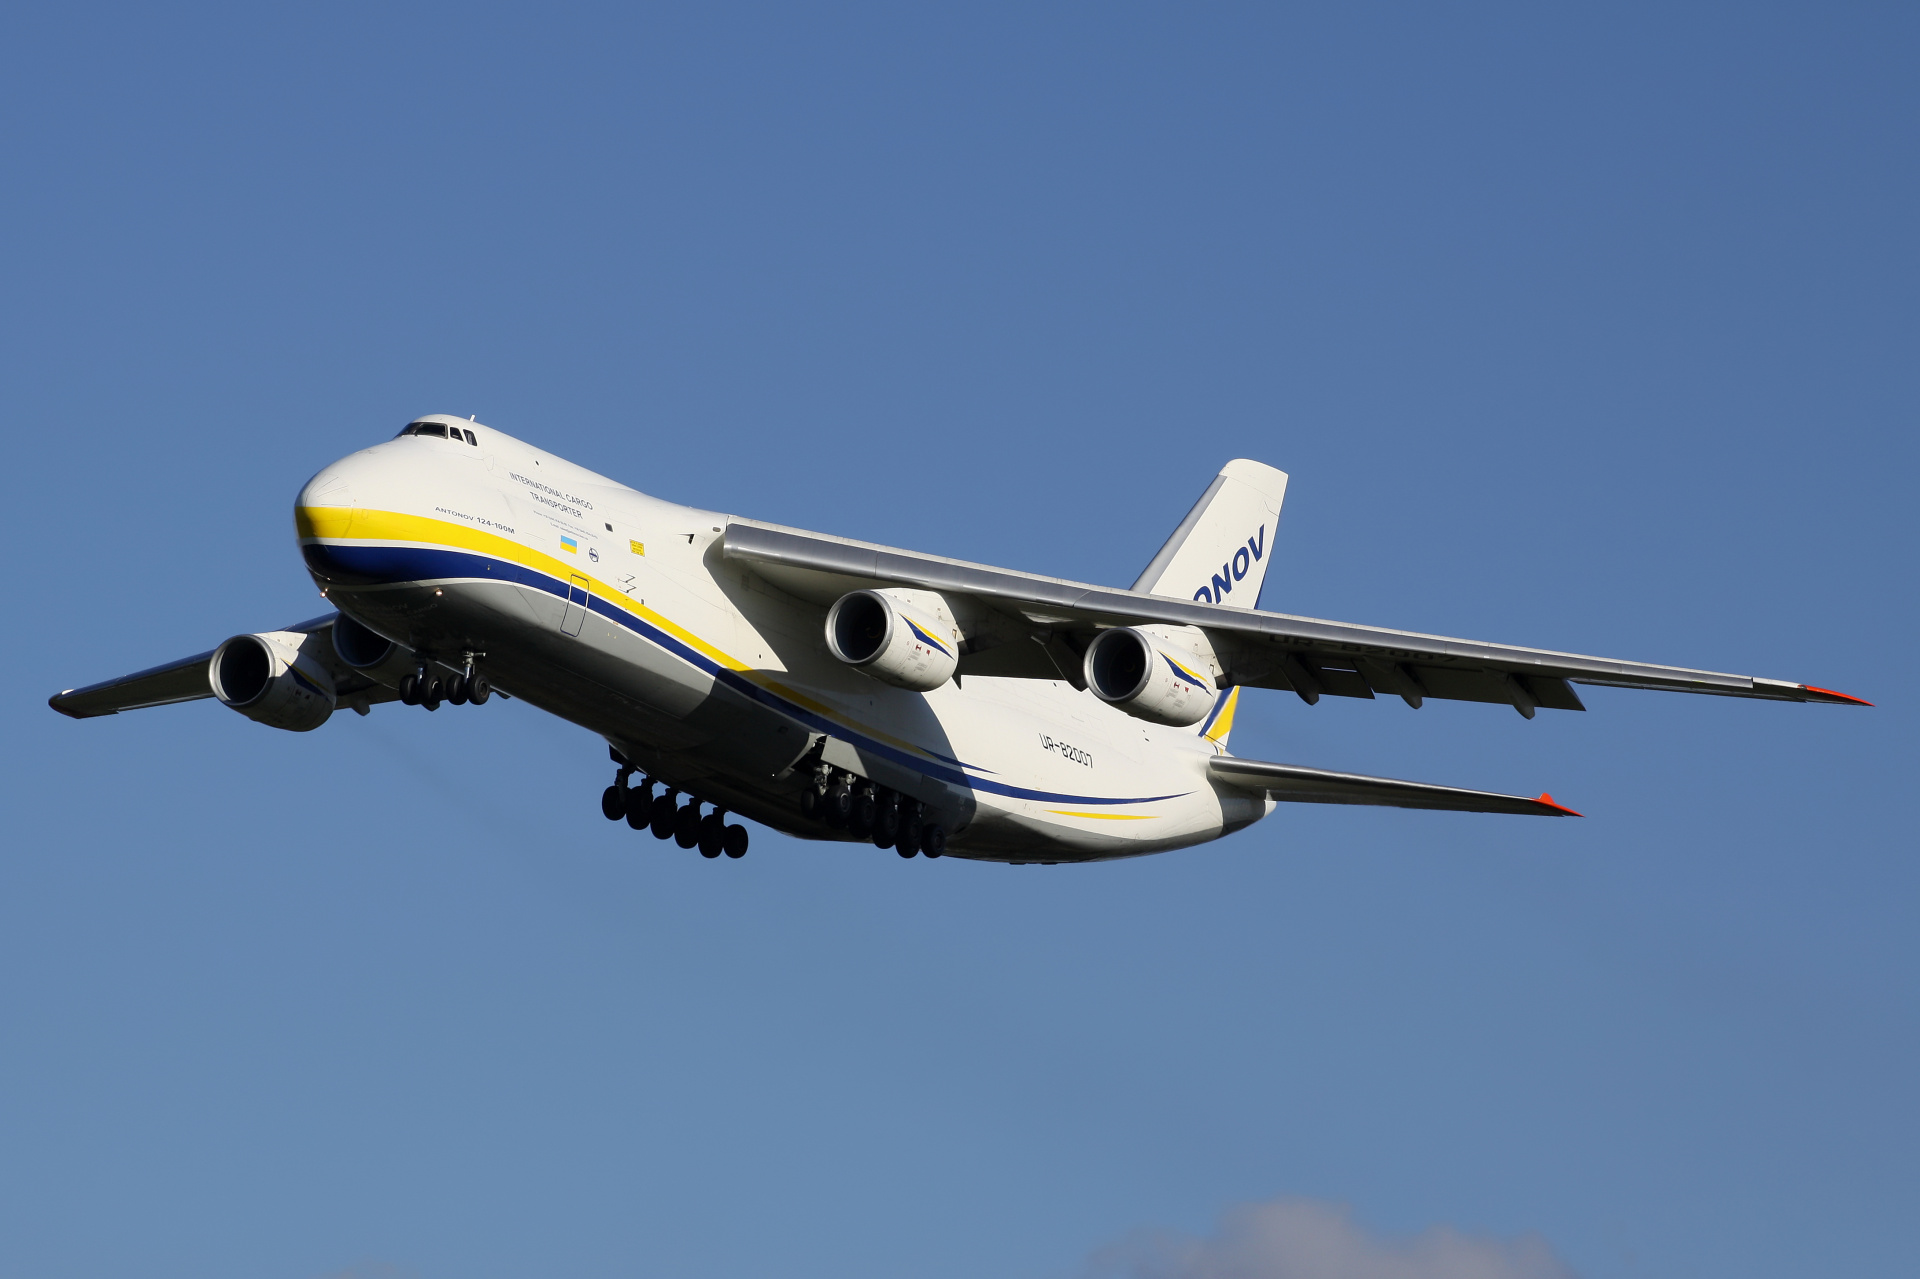 UR-82007 (Aircraft » EPWA Spotting » Antonov An-124-100 Ruslan » Antonov Airlines)